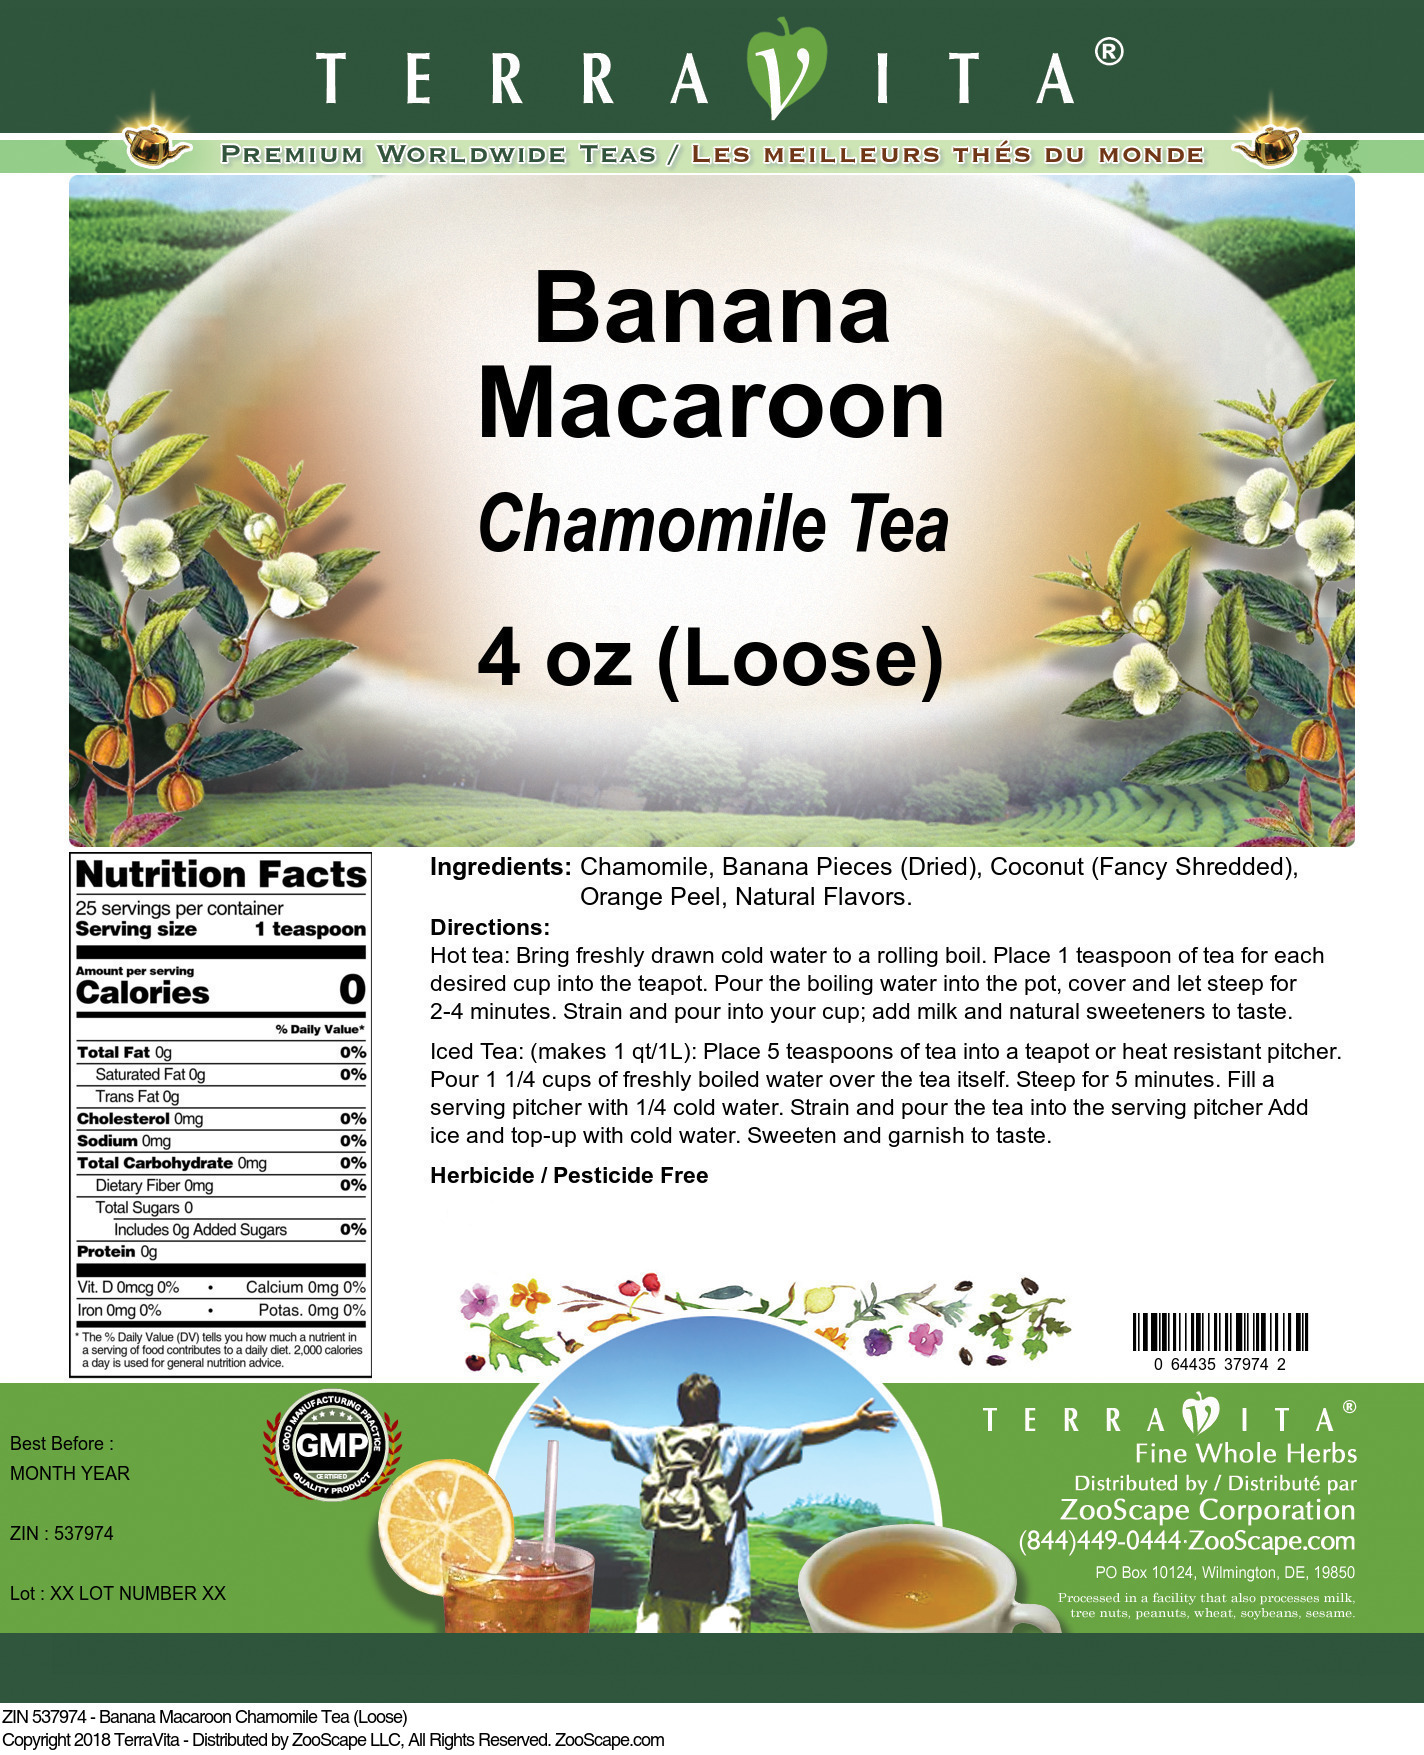 Banana Macaroon Chamomile Tea (Loose) - Label